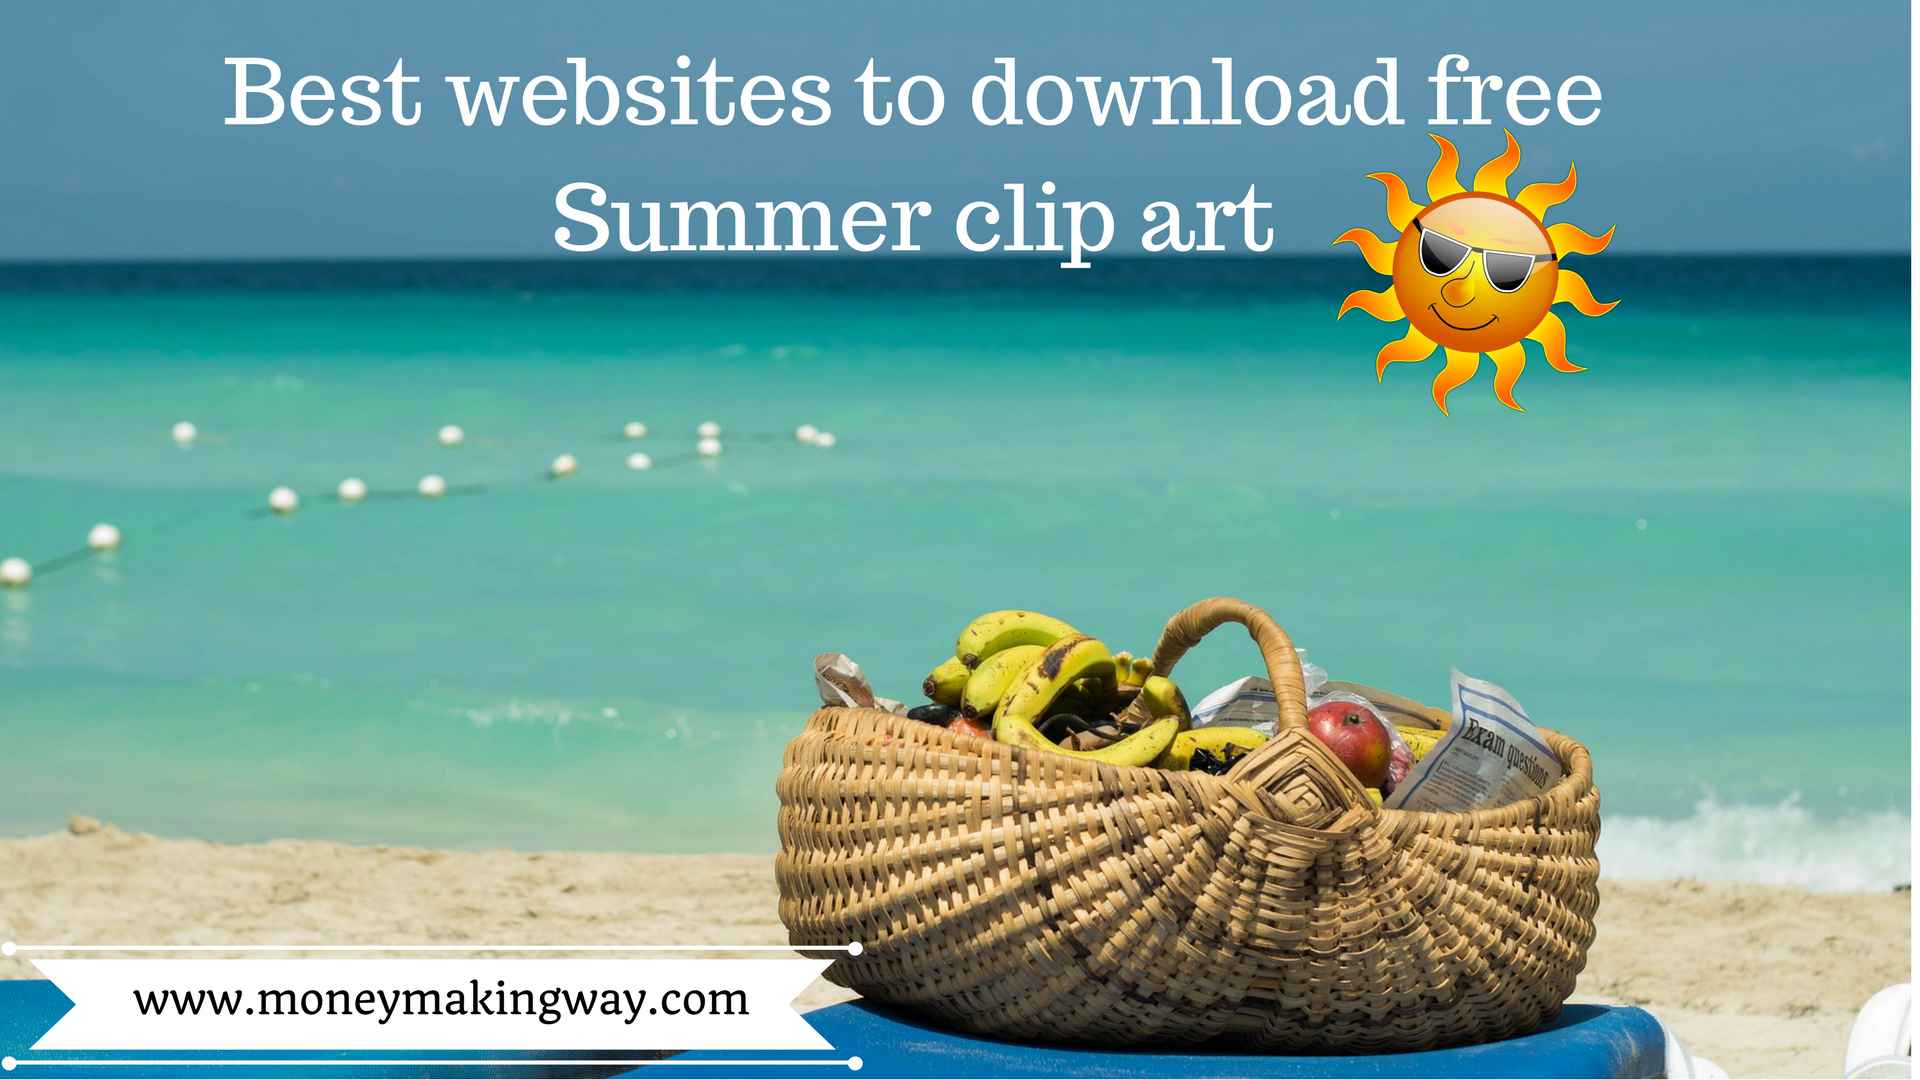 5 Best websites to download free summer clip art ...